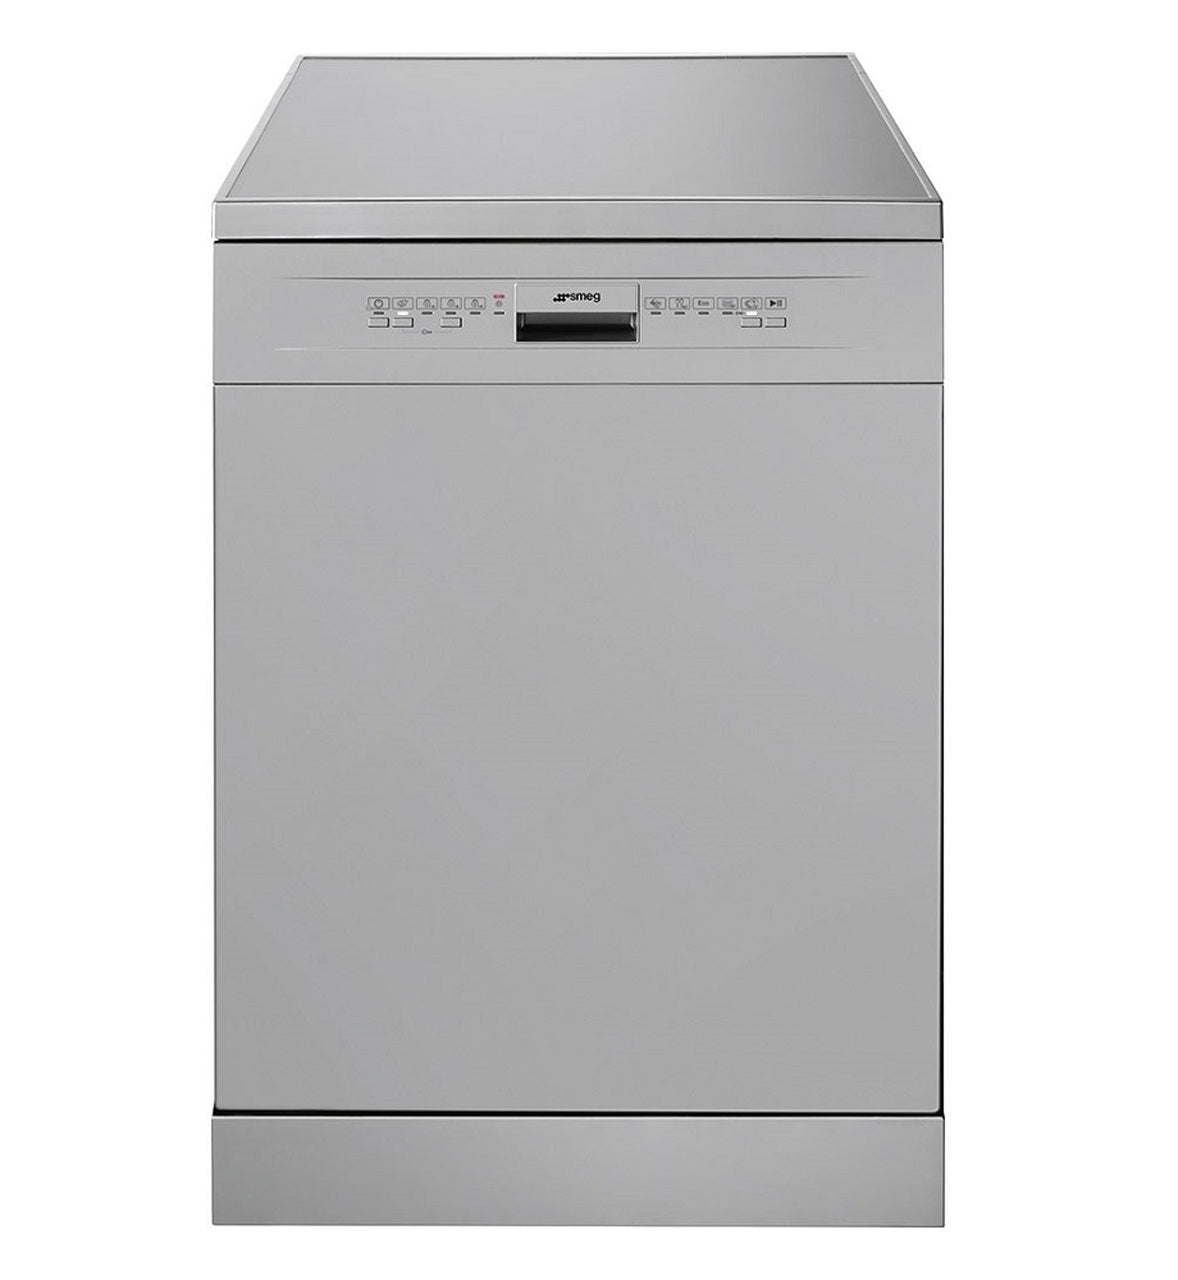 Smeg 60Cm Stainless Steel Freestanding Dishwasher - DWA6214X2